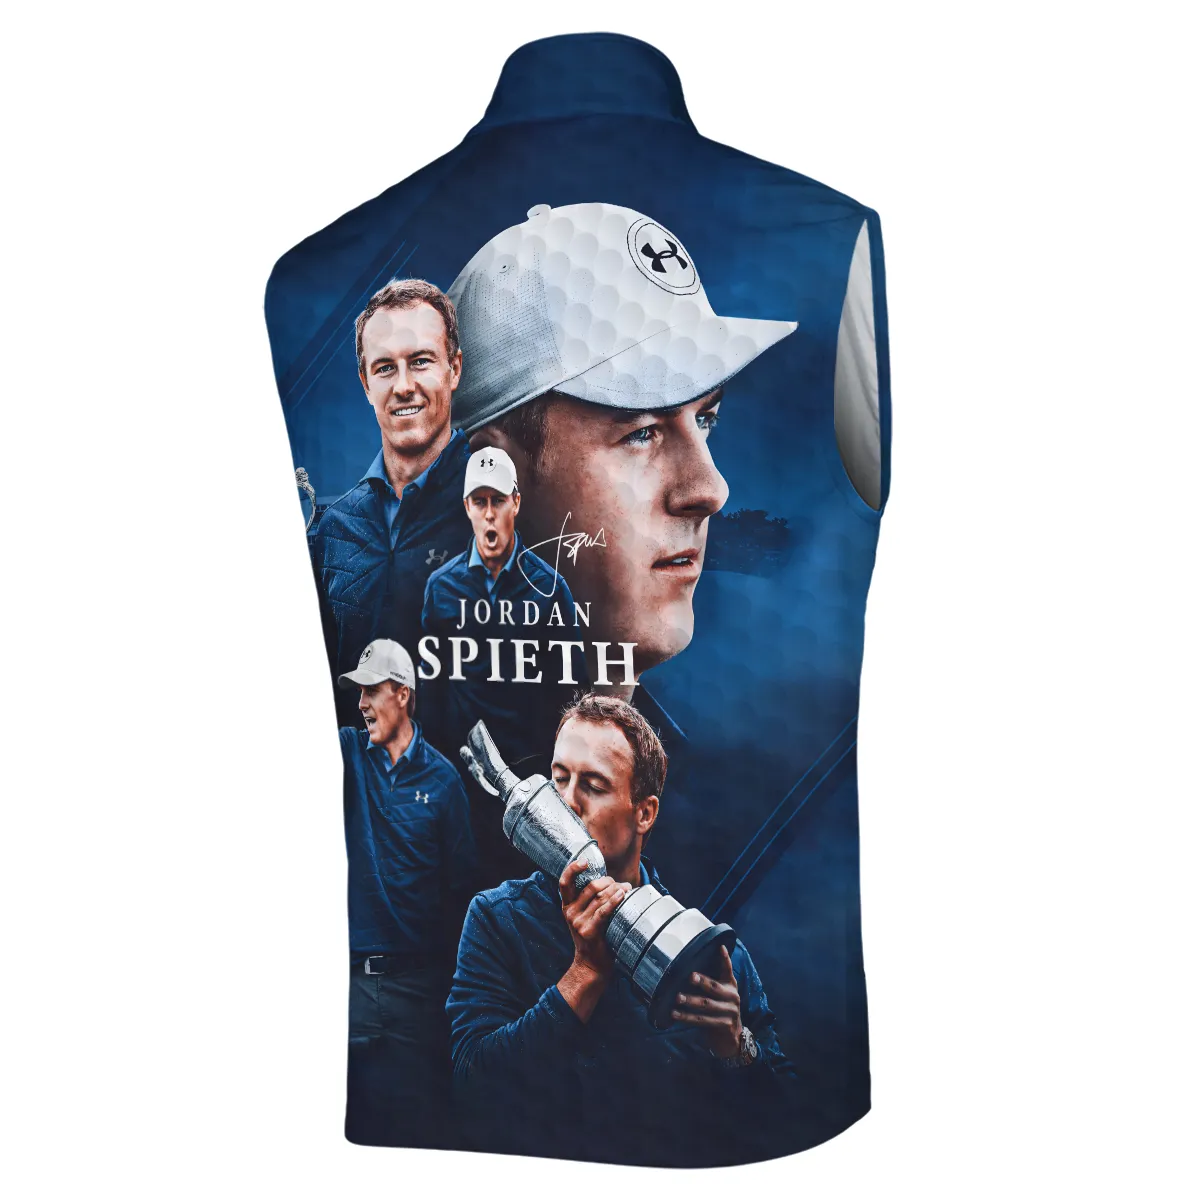 Golf Jordan Spieth Fans Loves 152nd The Open Championship Titleist Hoodie Shirt Style Classic